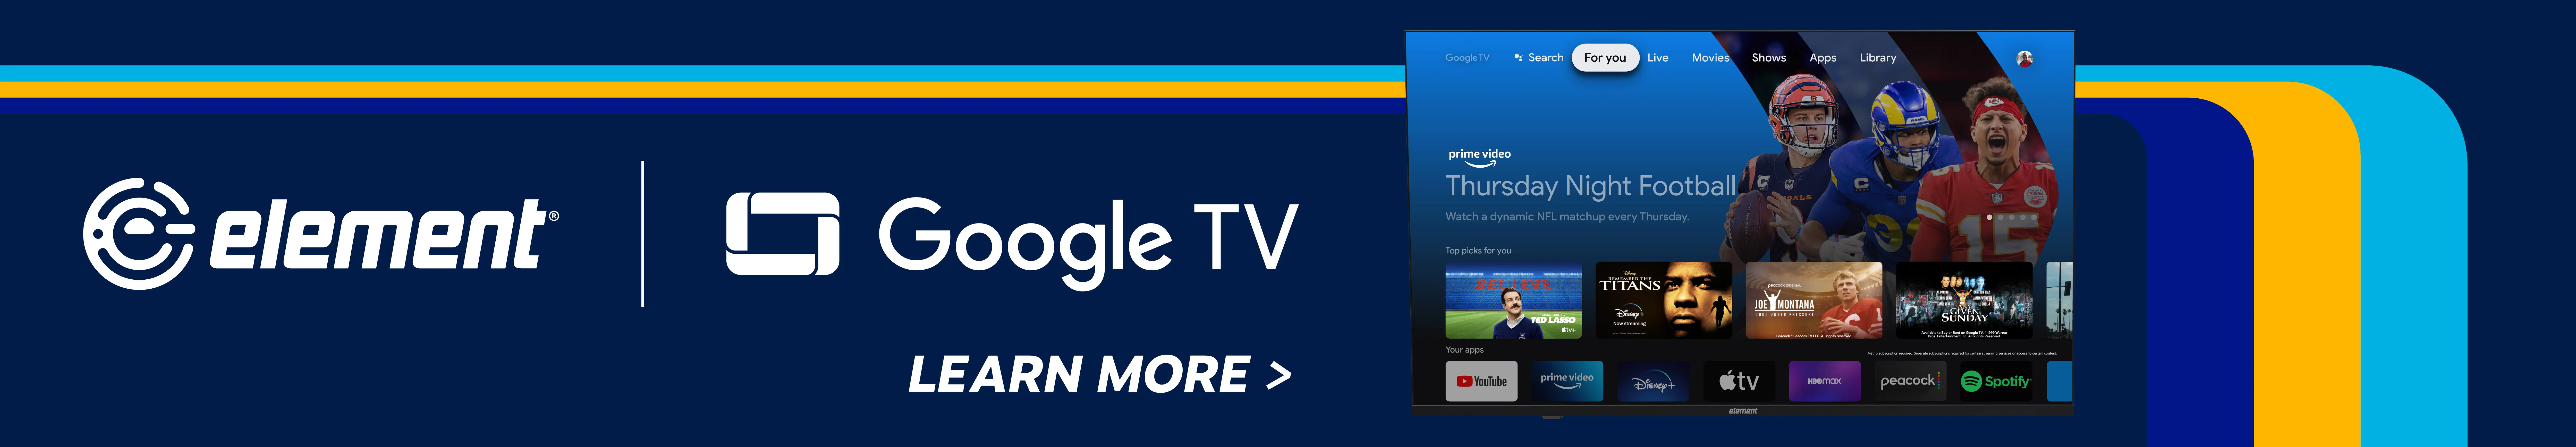 Smart Google TV platform